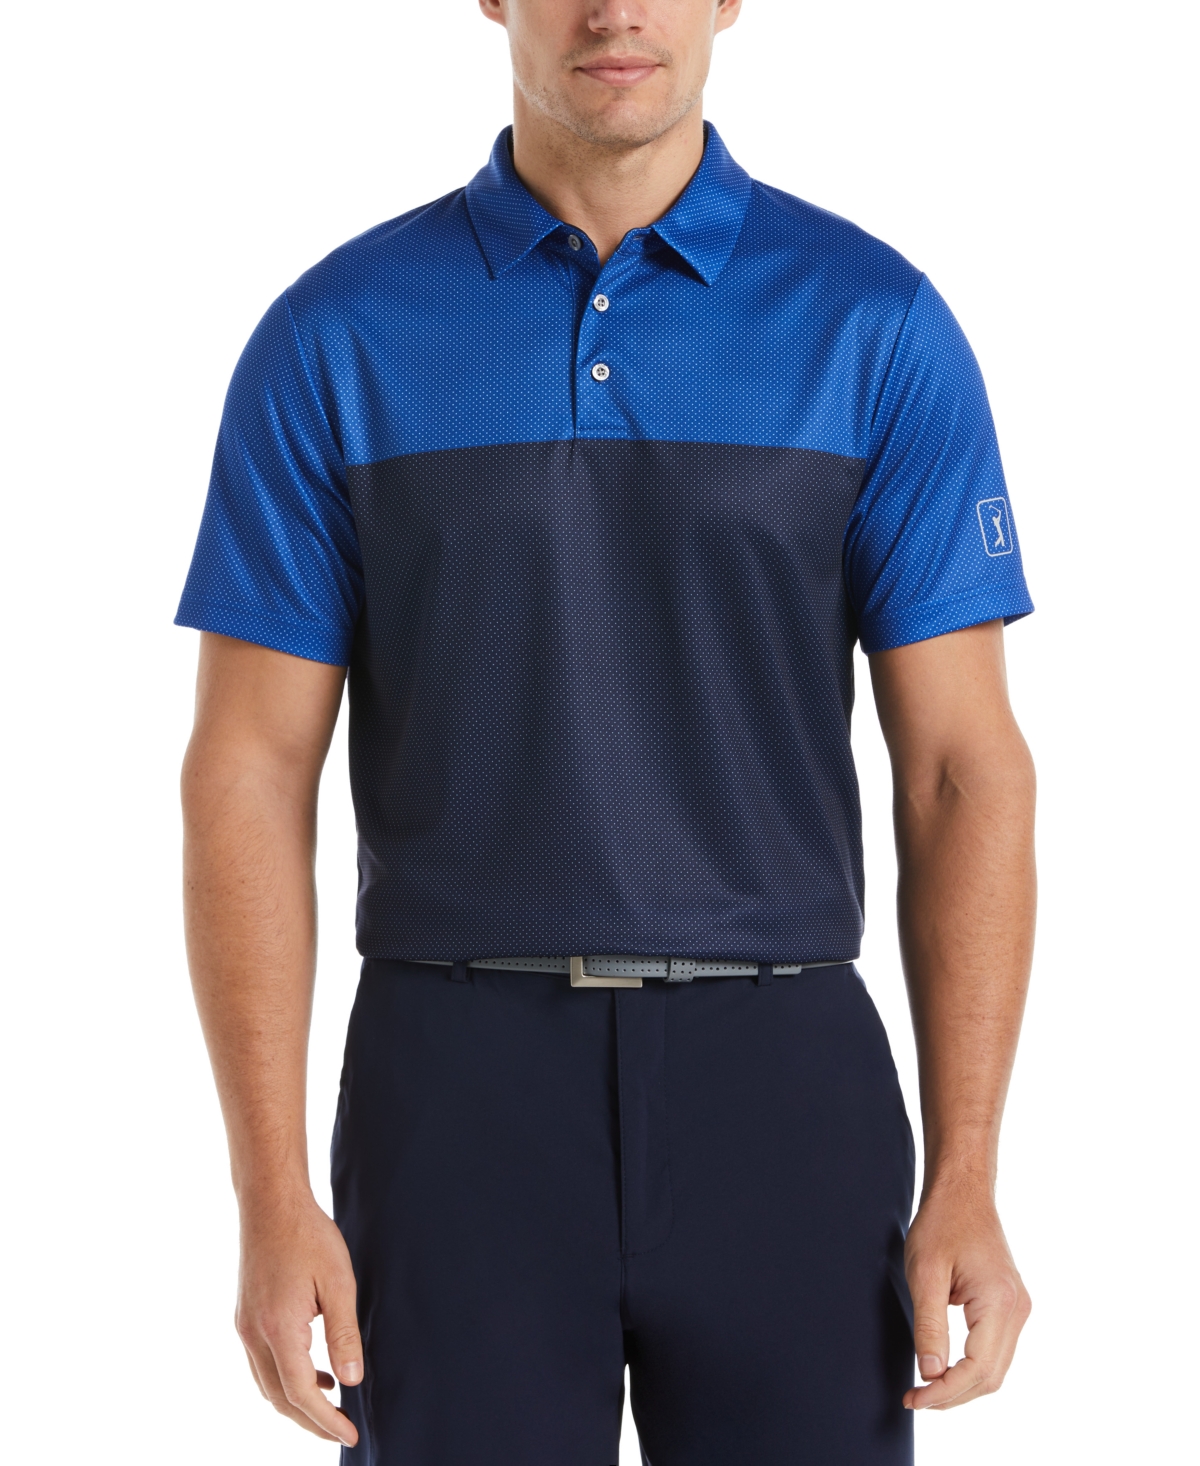 Men's Airflux Birdseye Block Print Short-Sleeve Golf Polo Shirt - Peacoat/peacoat